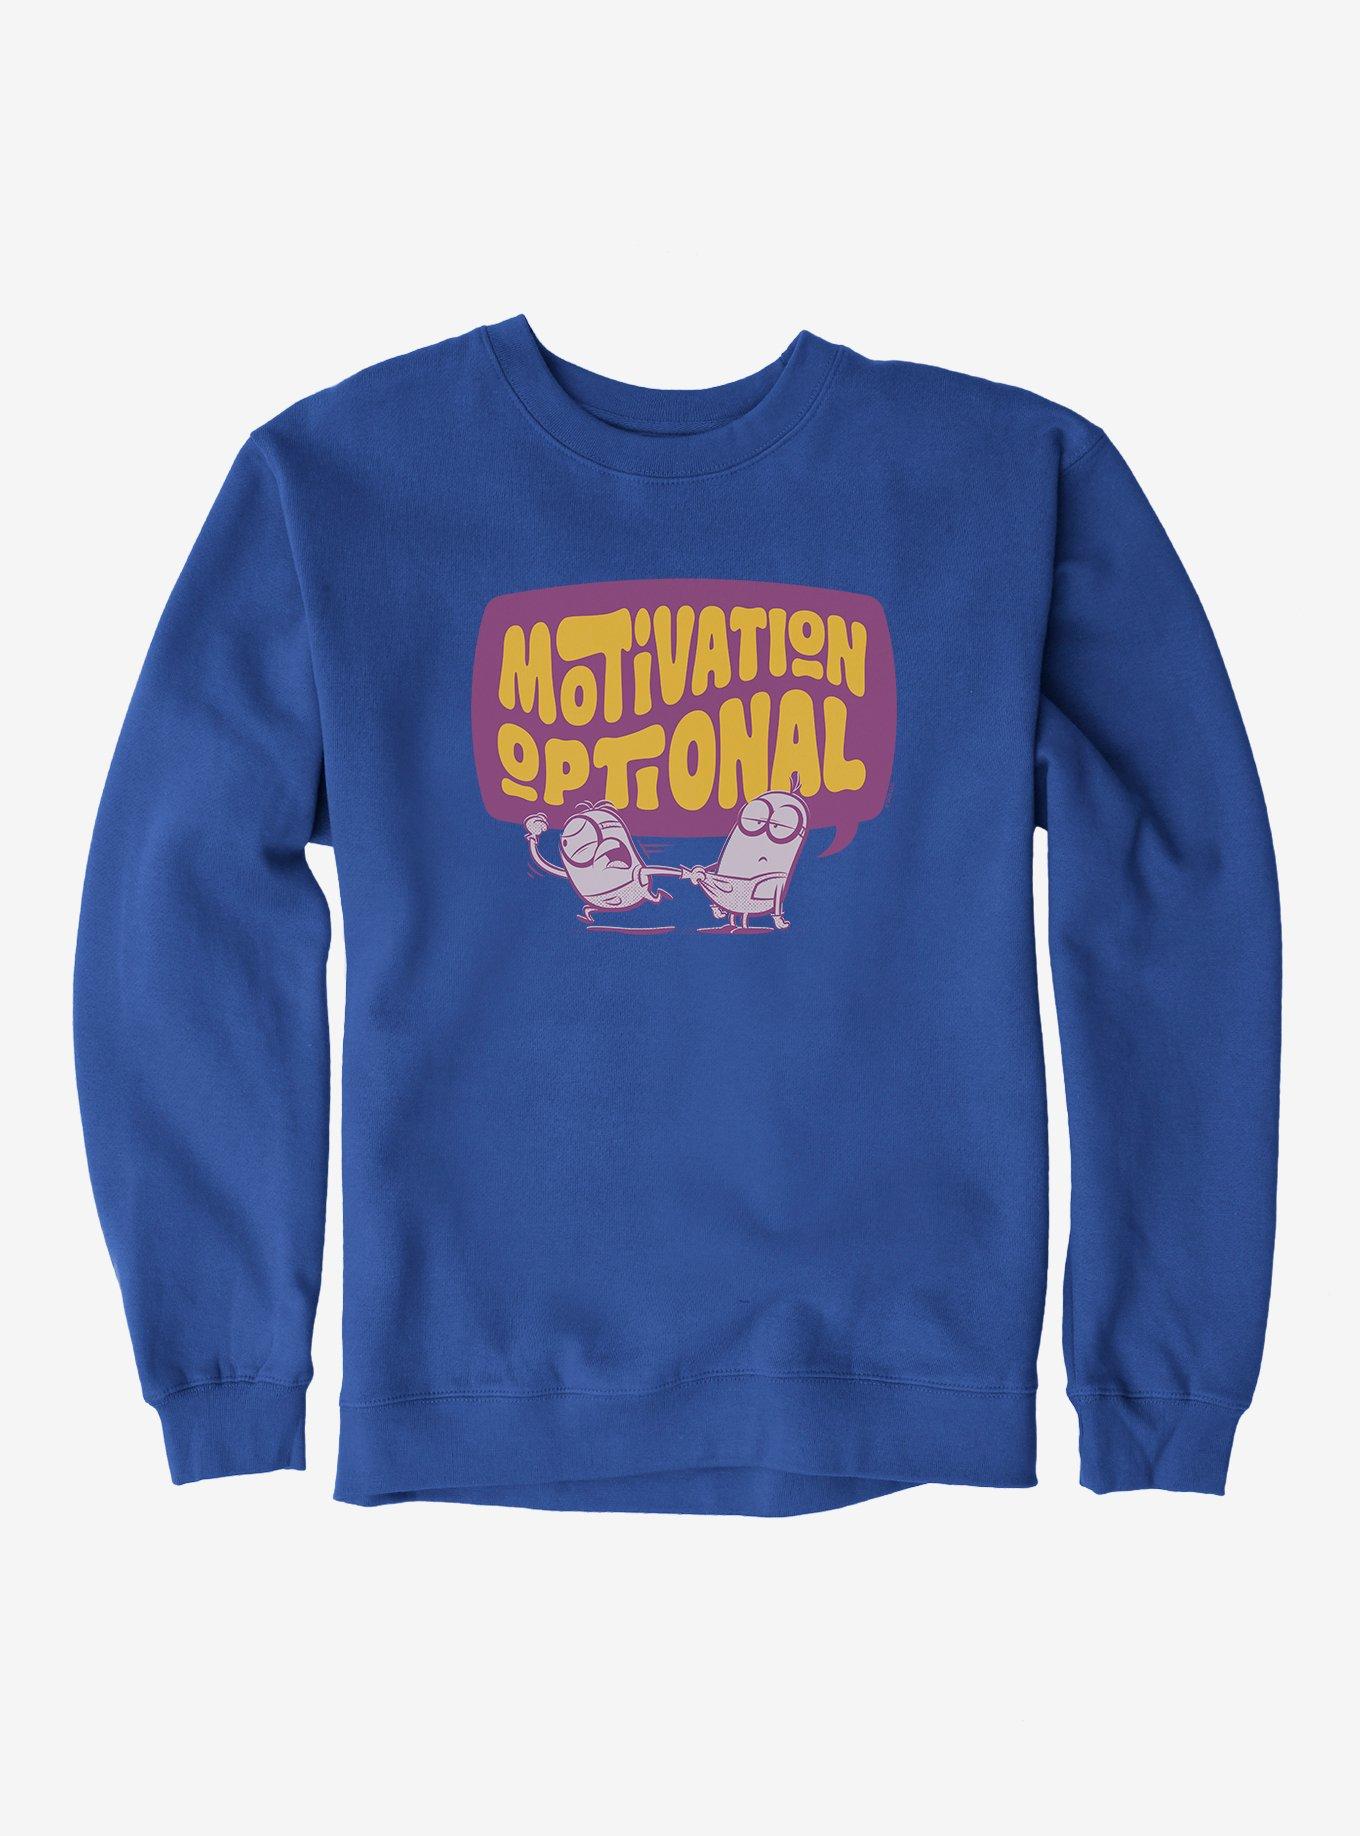 Minions Motivation Optional Sweatshirt, ROYAL BLUE, hi-res